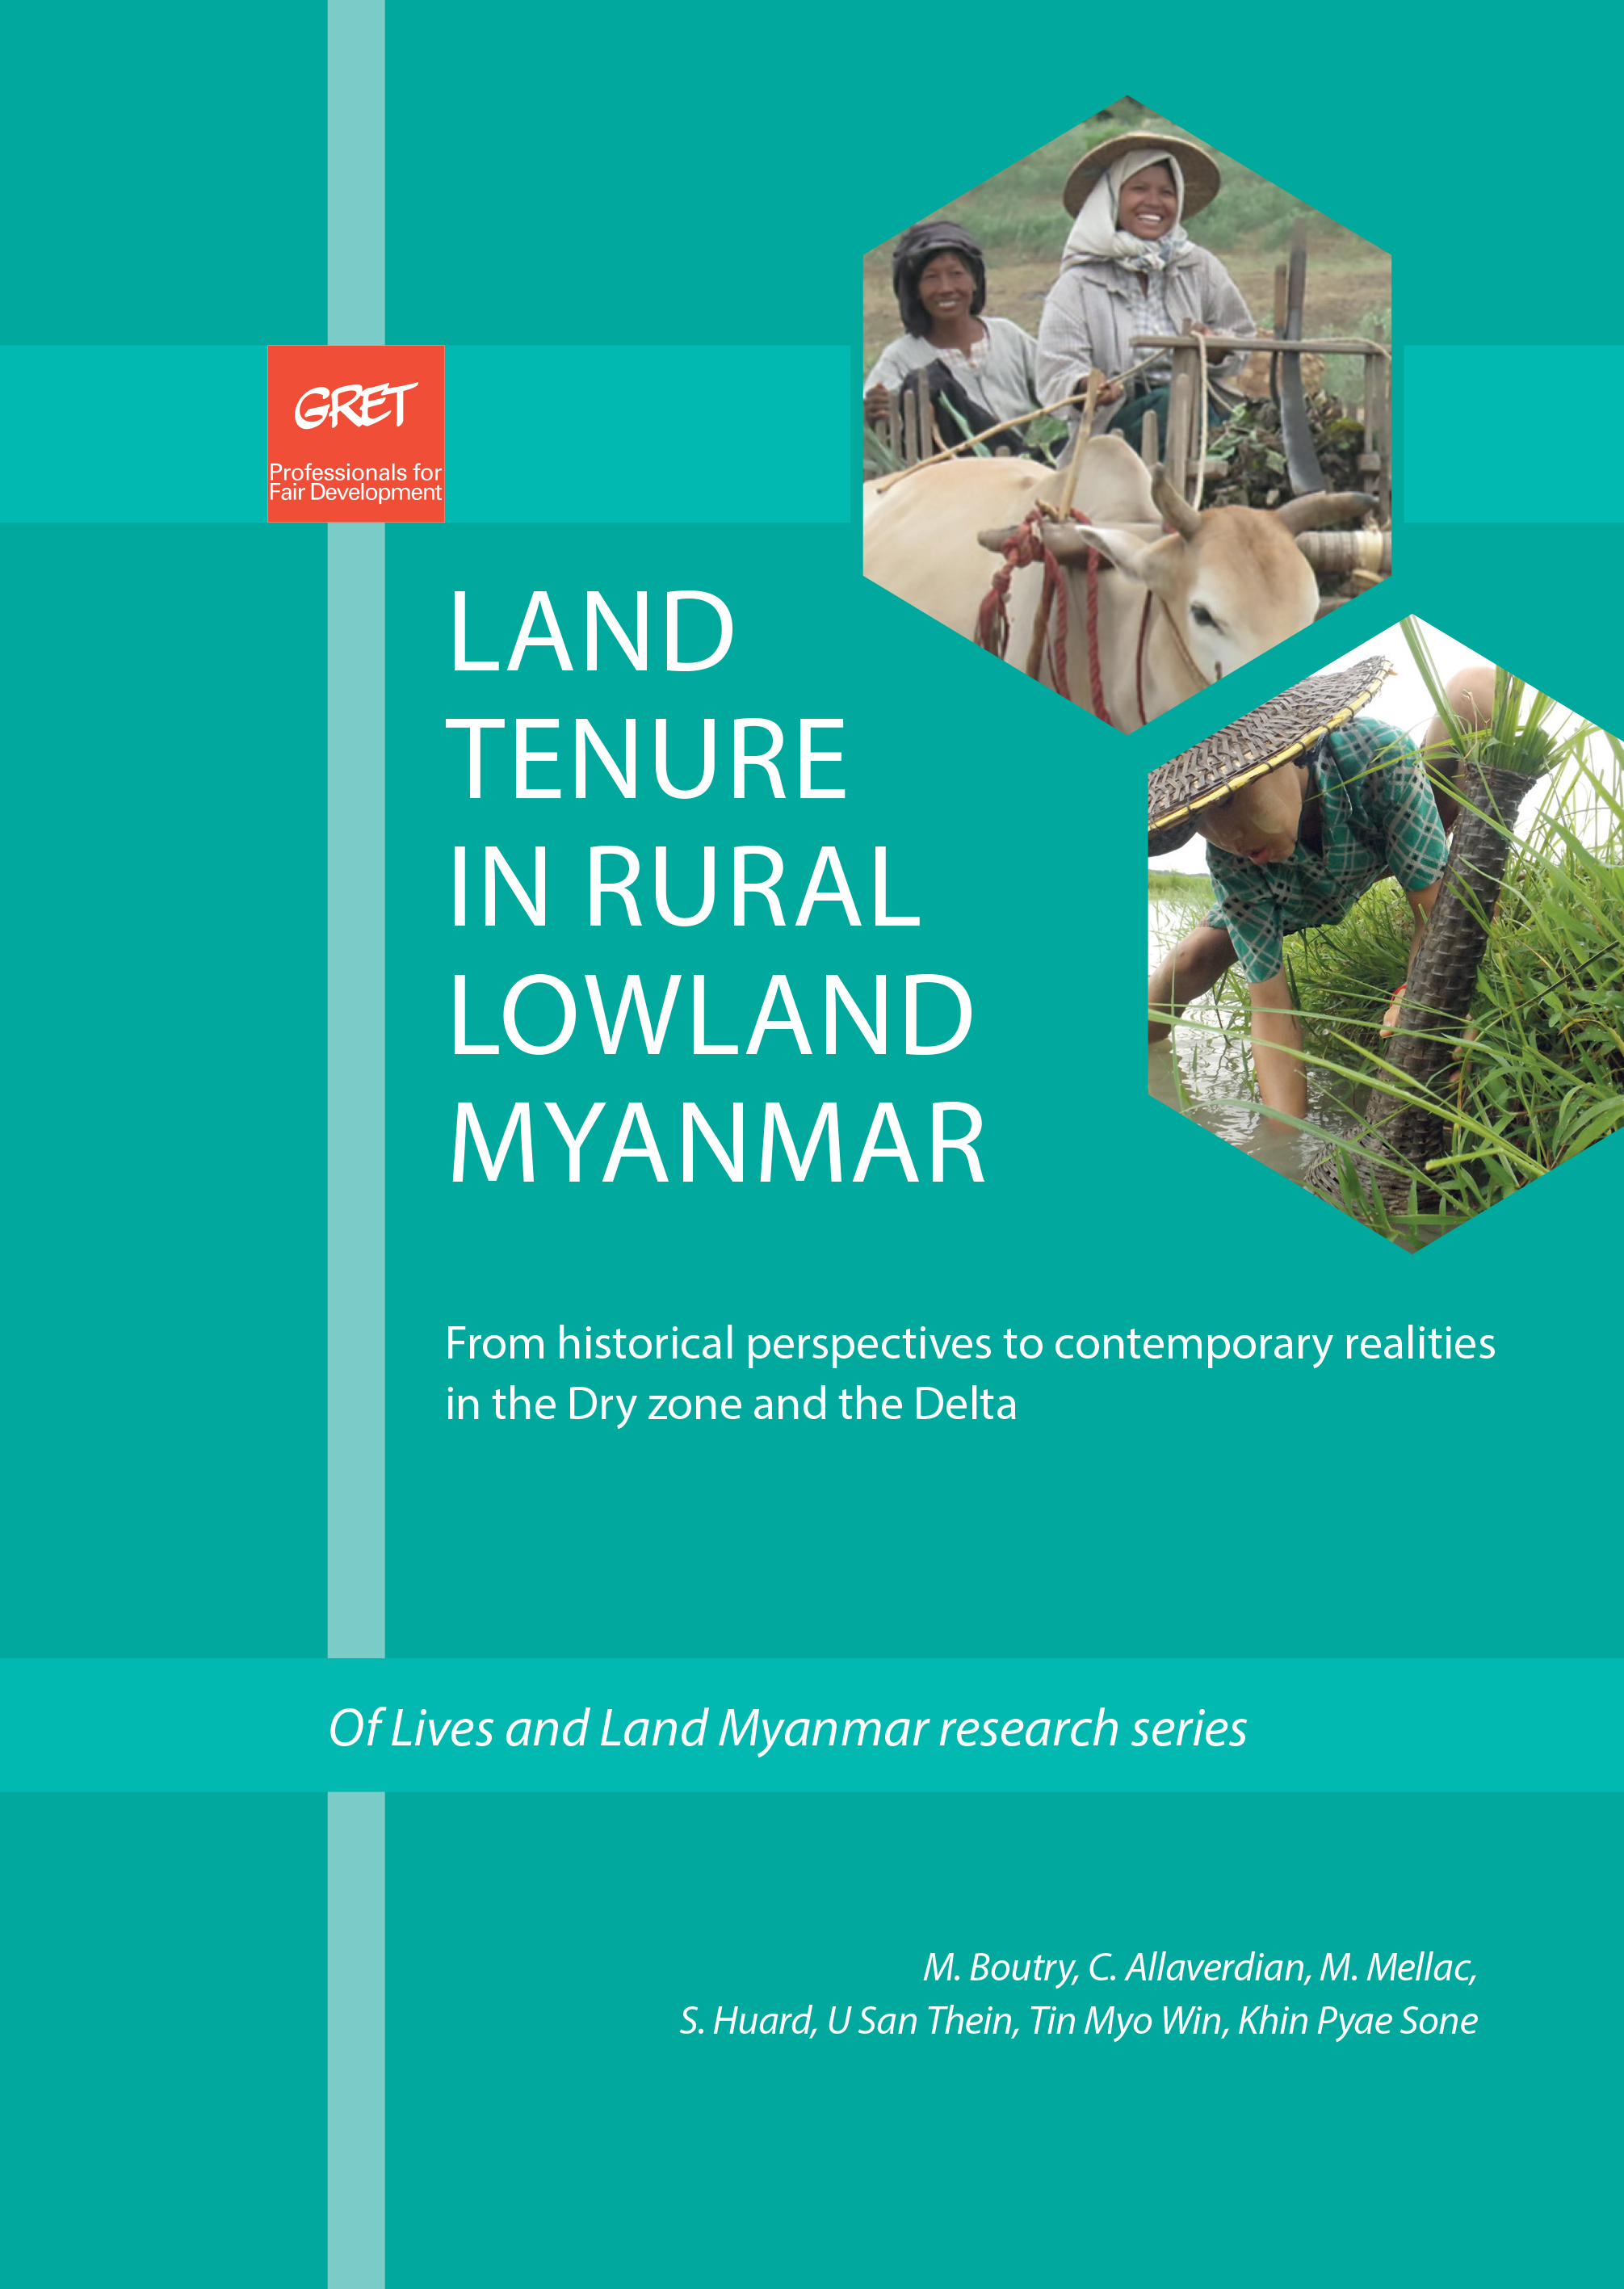 Land tenure in rural low land Myanmar